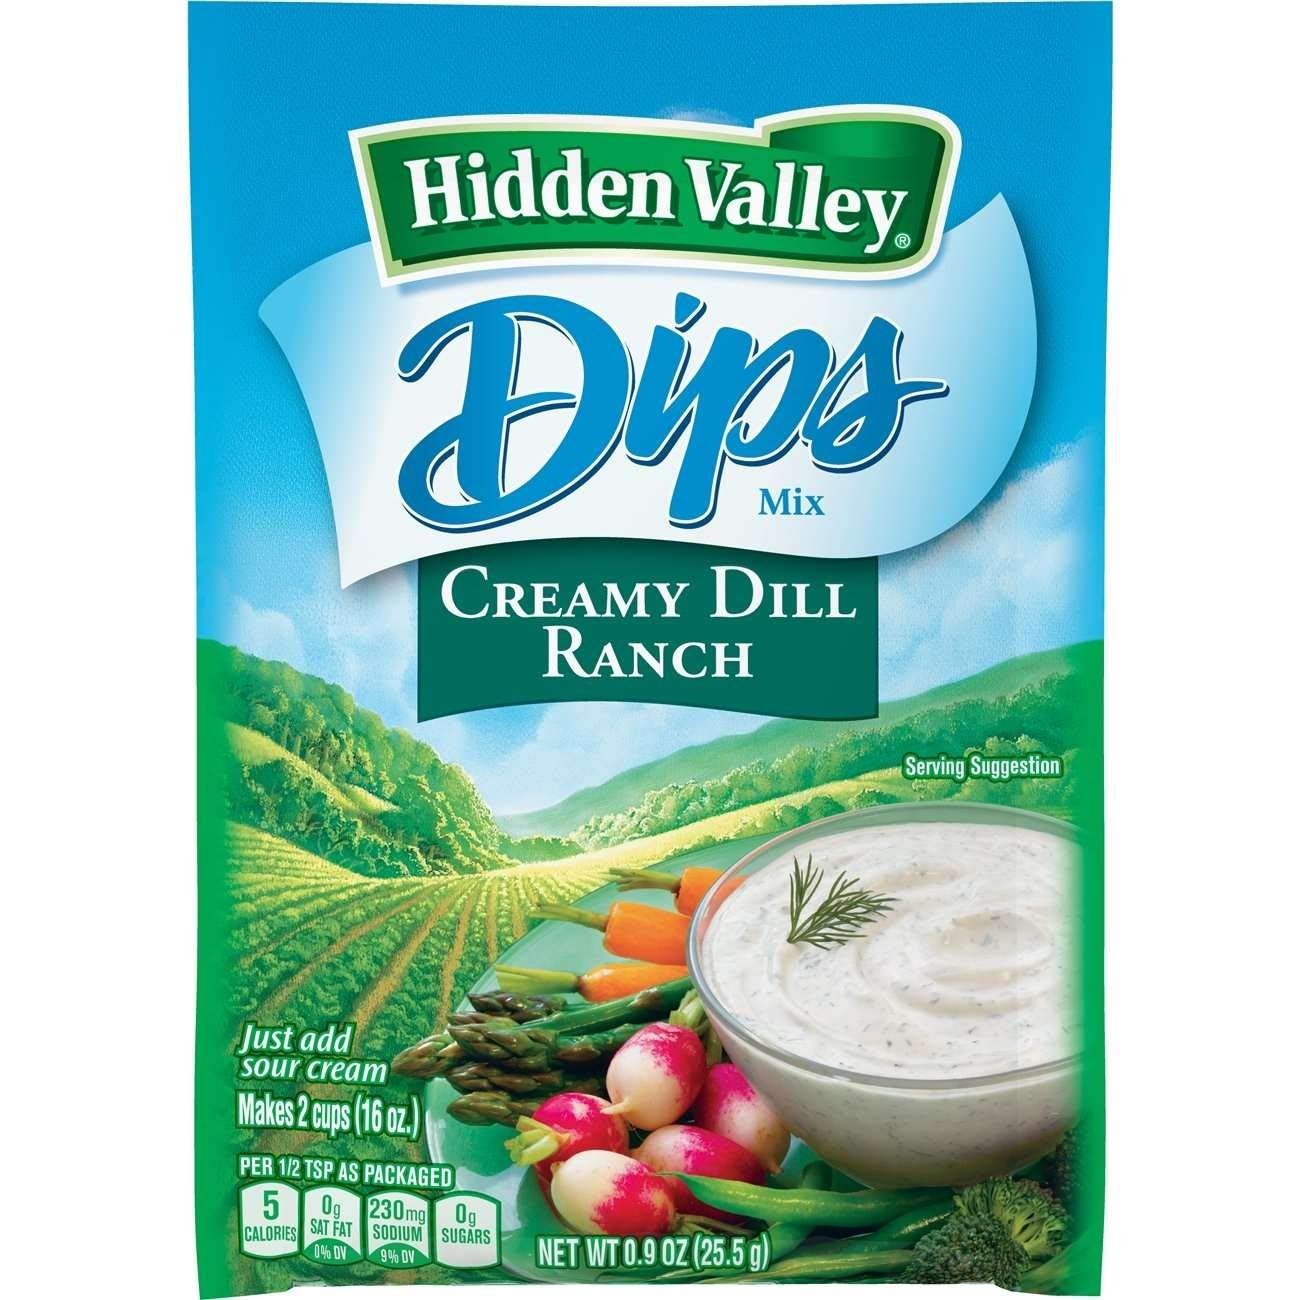 Hidden Valley Creamy Dill Ranch